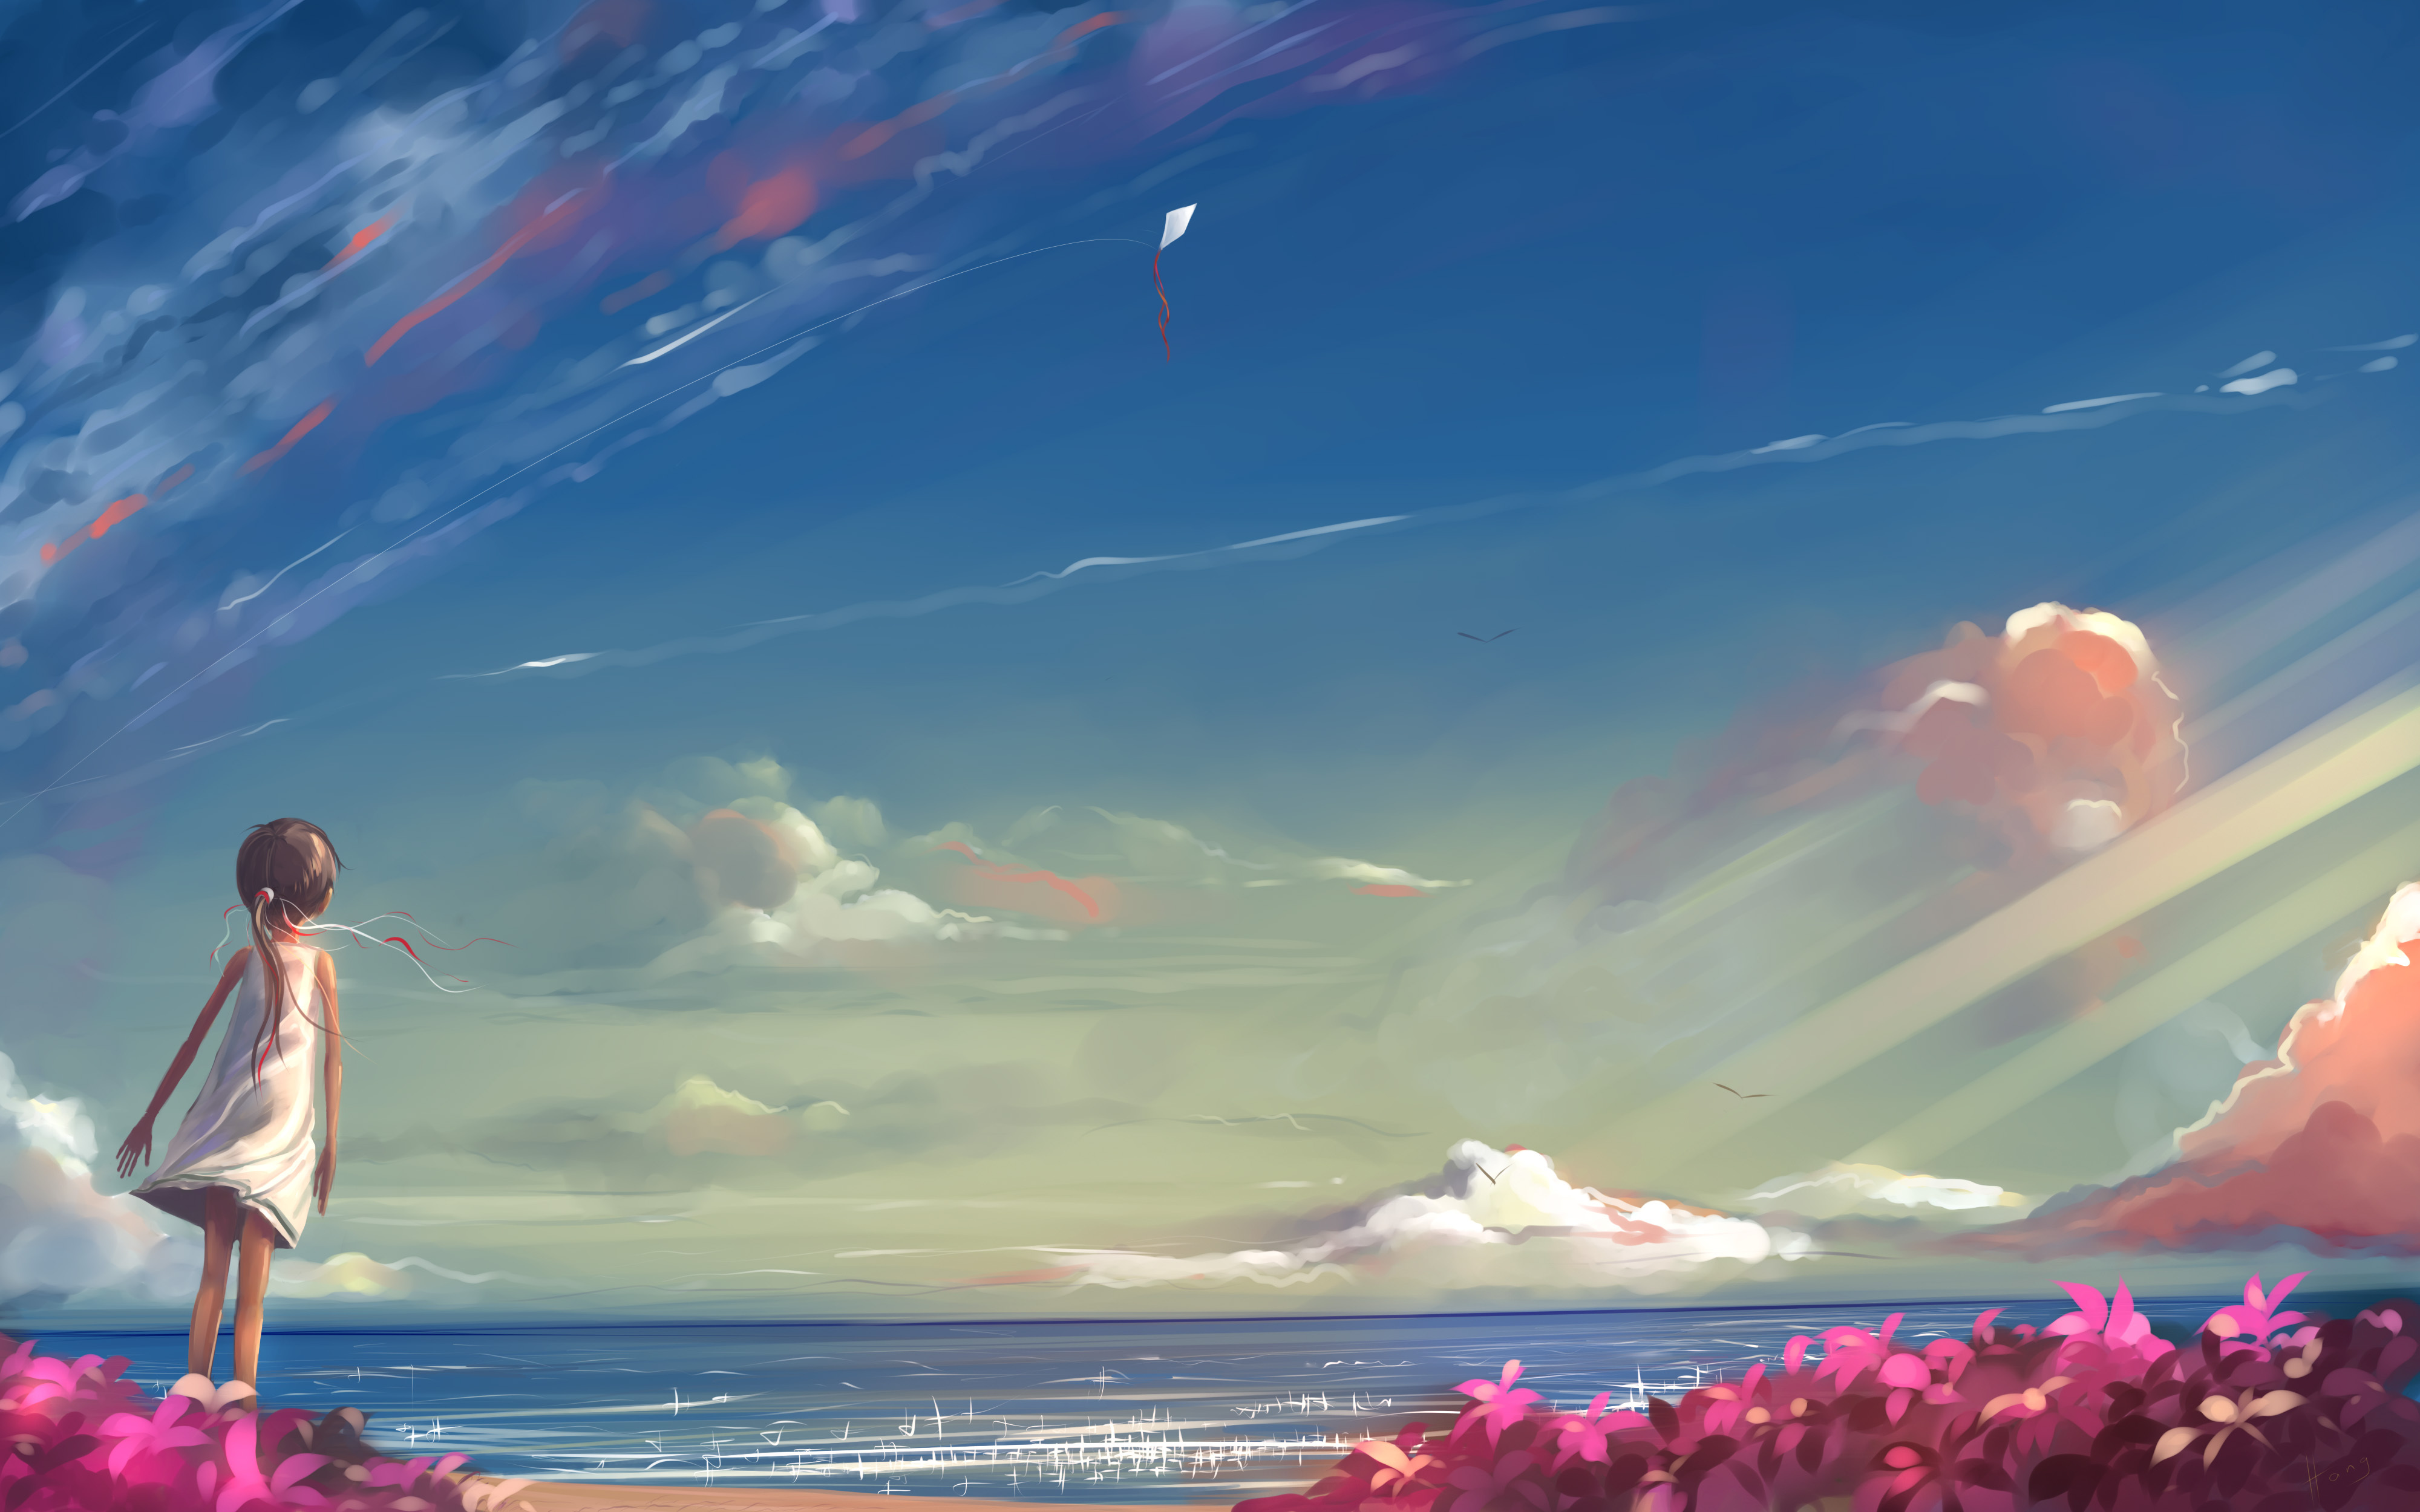 Anime Girl near Ocean Flowers by Hangmoon